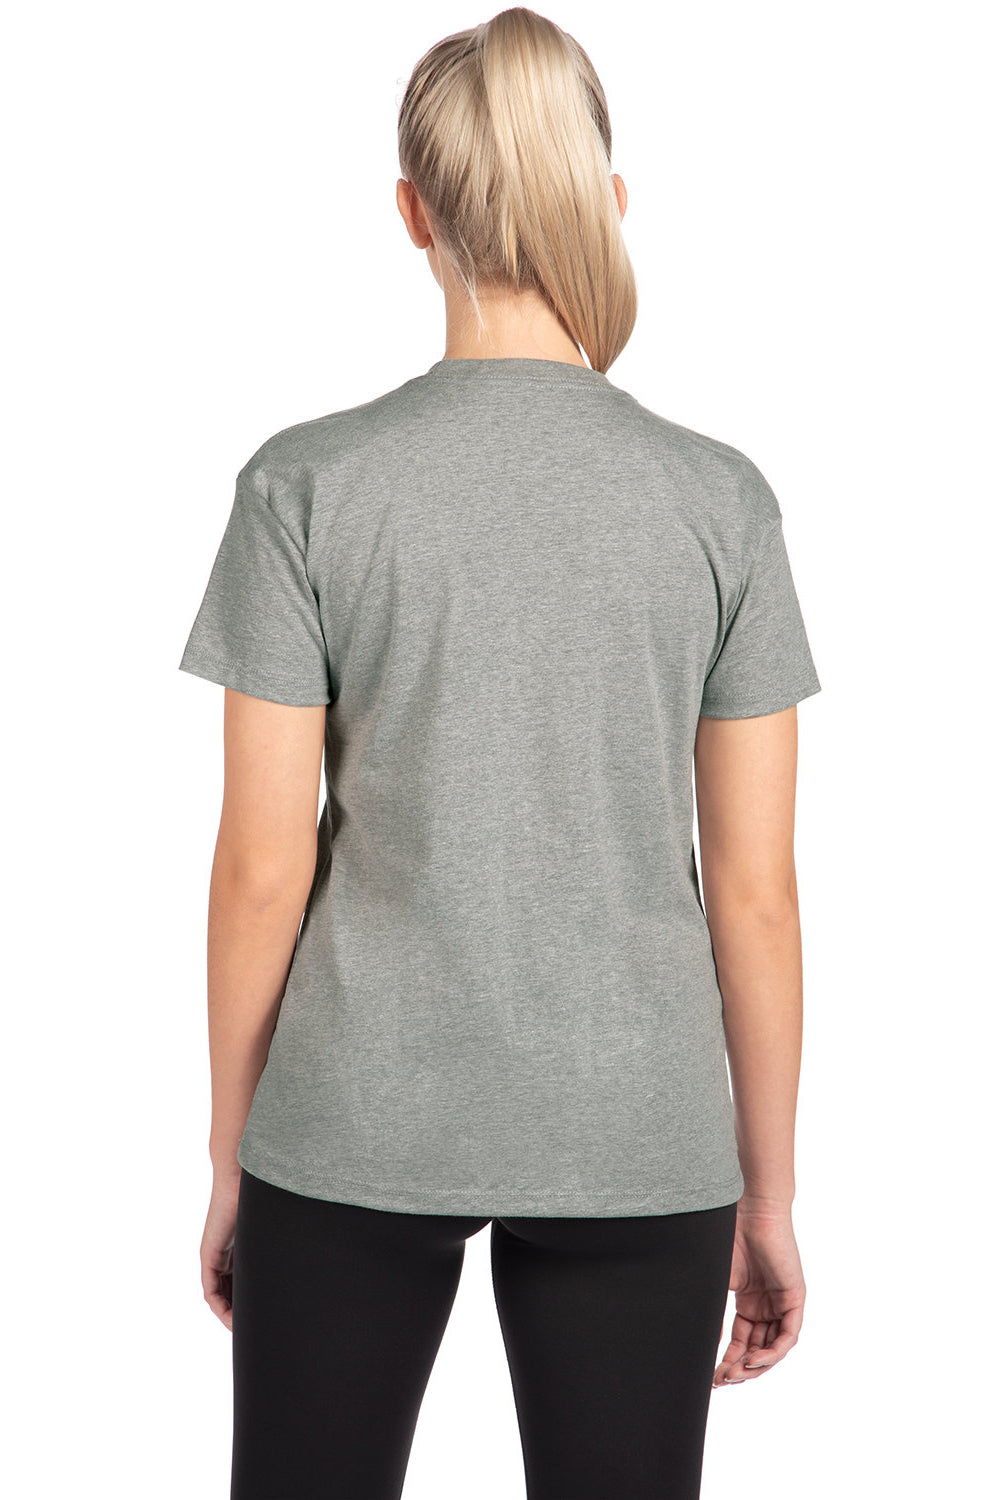 Next Level 3910NL Womens Relaxed Short Sleeve Crewneck T-Shirt Heather Grey Back